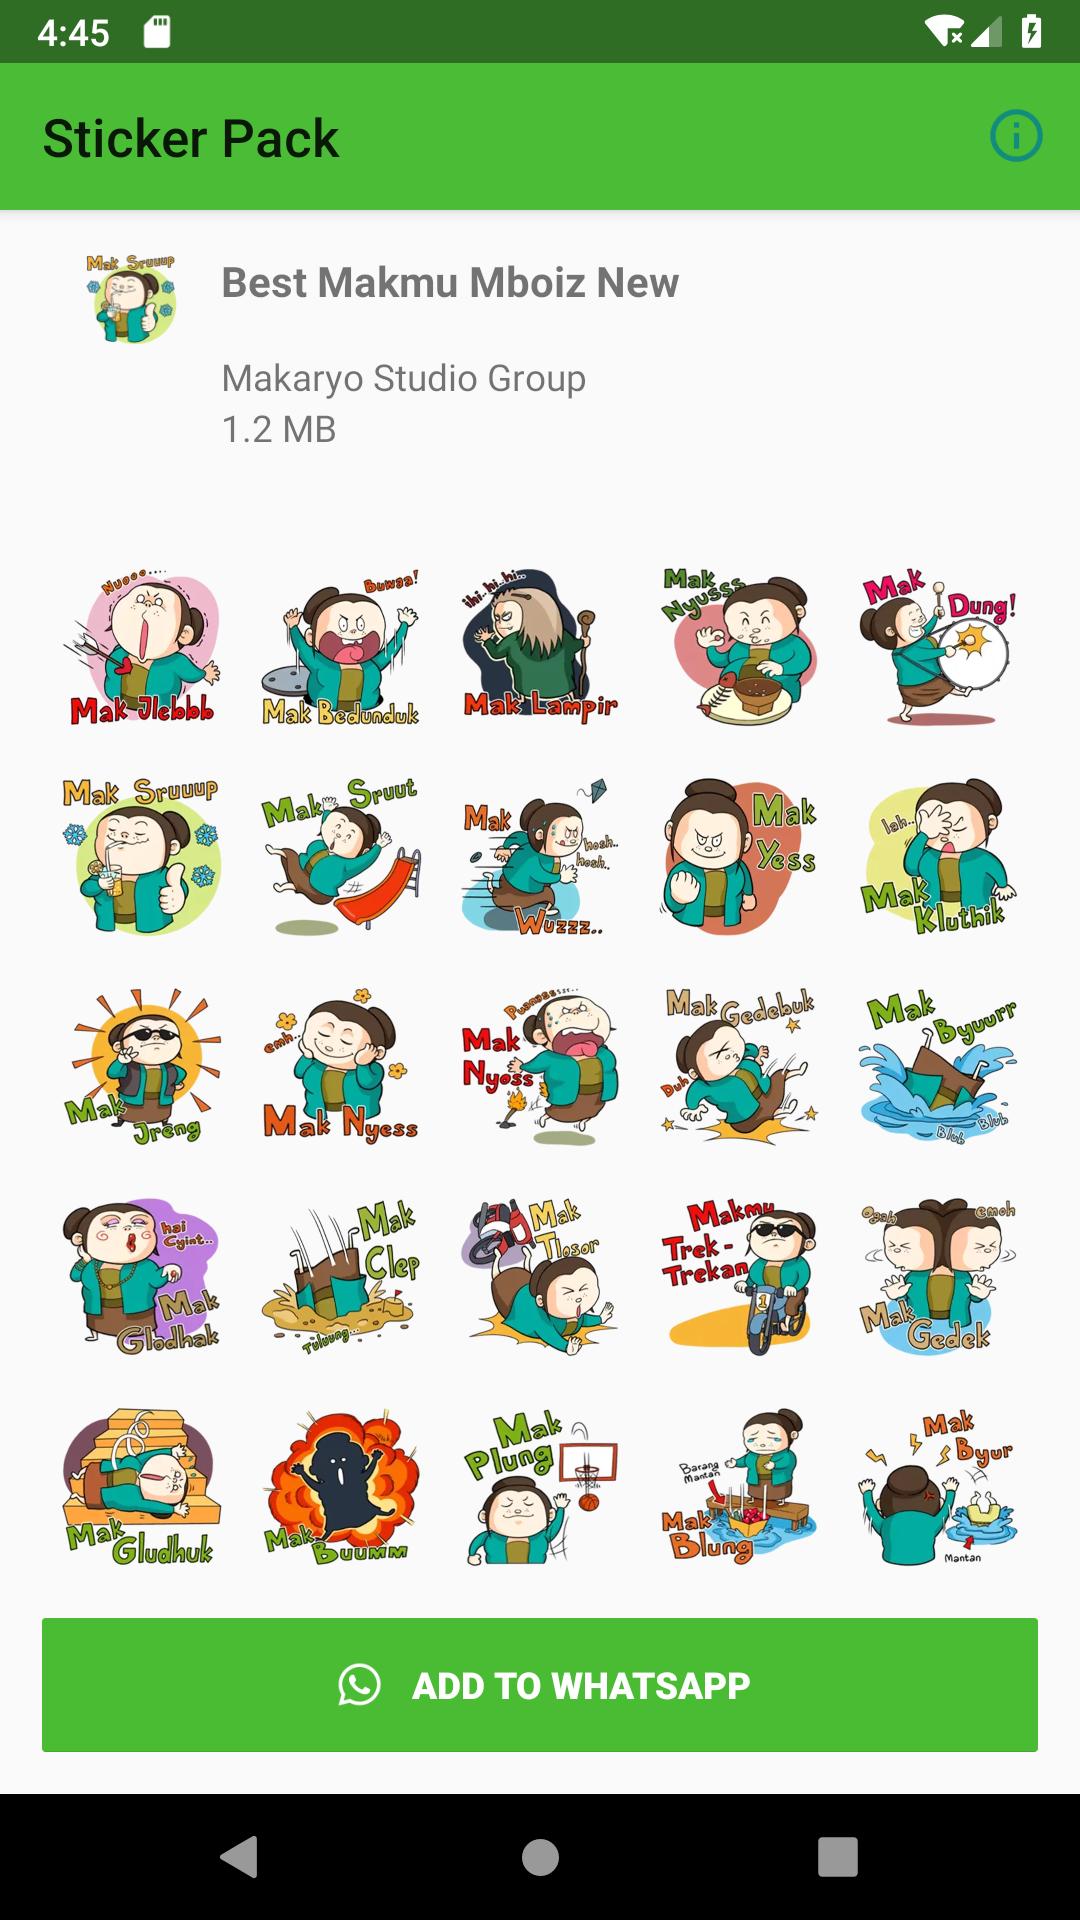 Koleksi Sticker Pack Jawa Lucu Wastickerapps Baru For Android